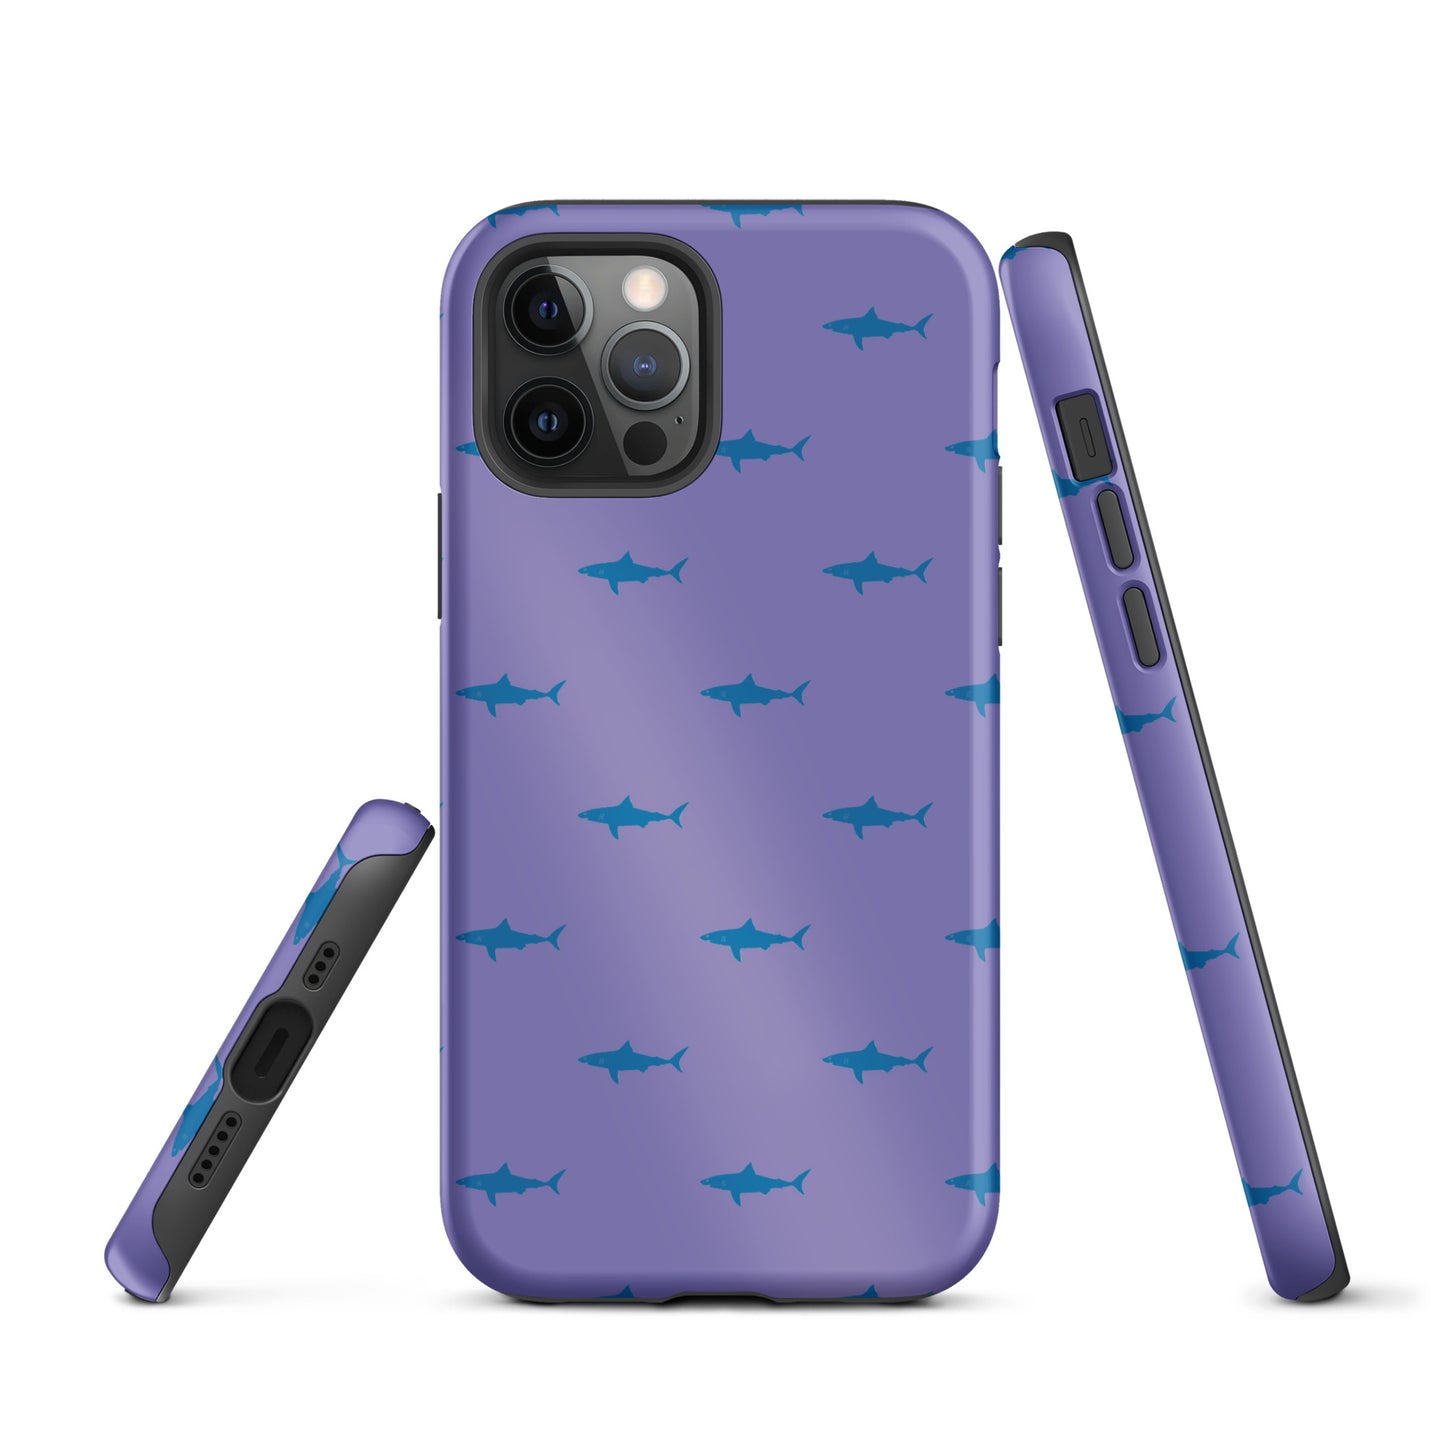 Shark iPhone Case - Blue on Purple